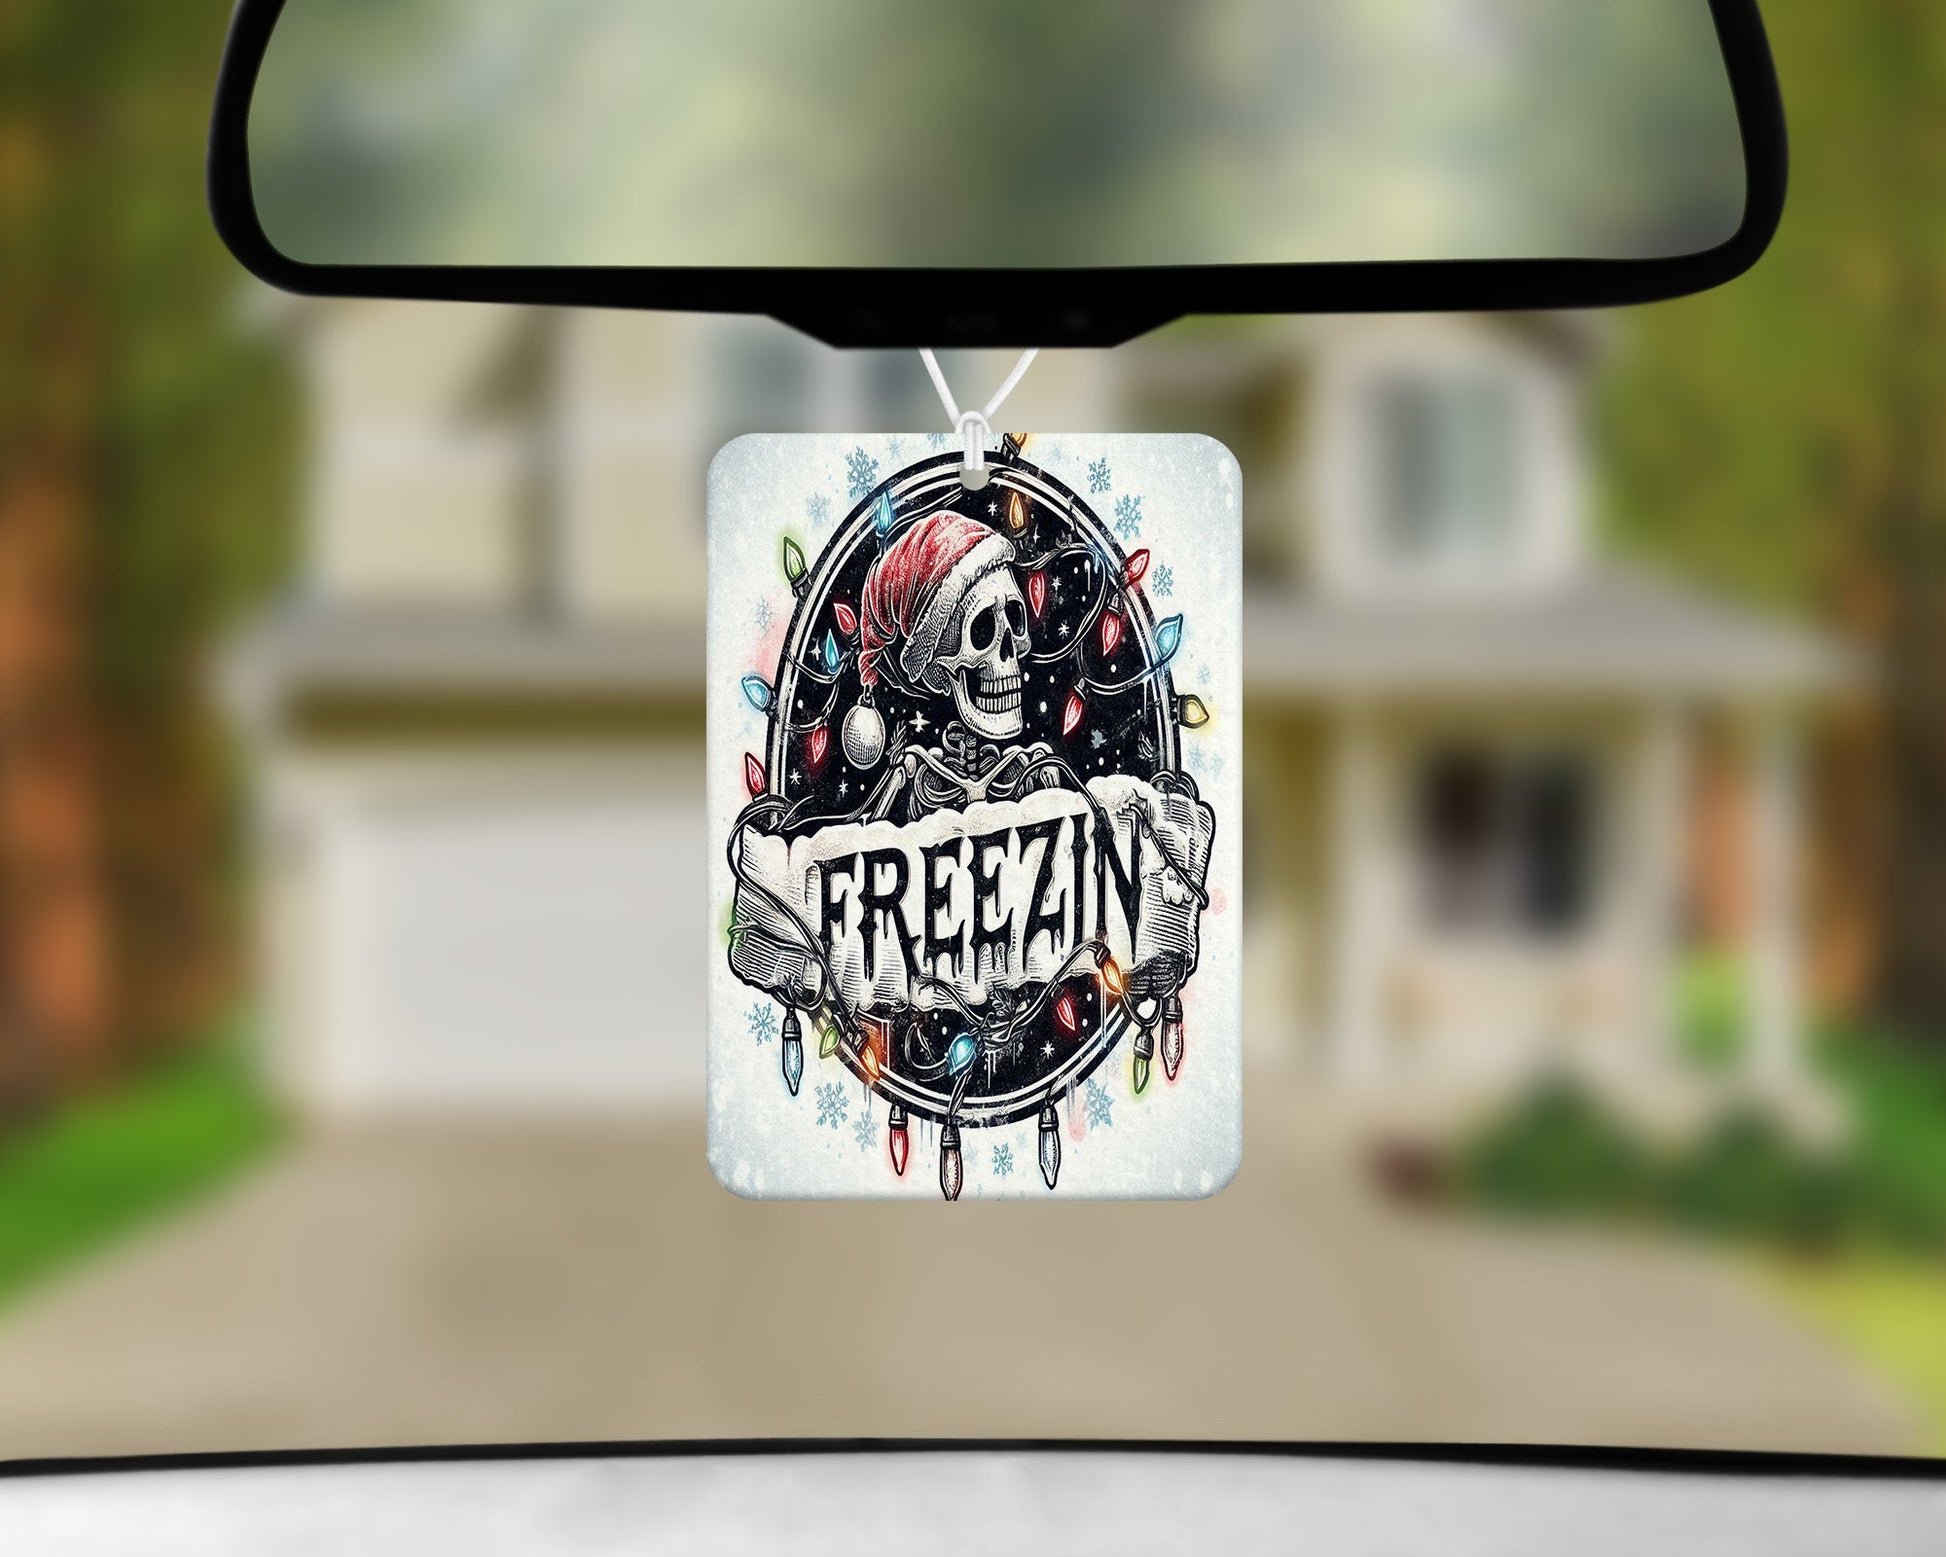 Freezin|Freshie|Includes Scent Bottle - Vehicle Air Freshener